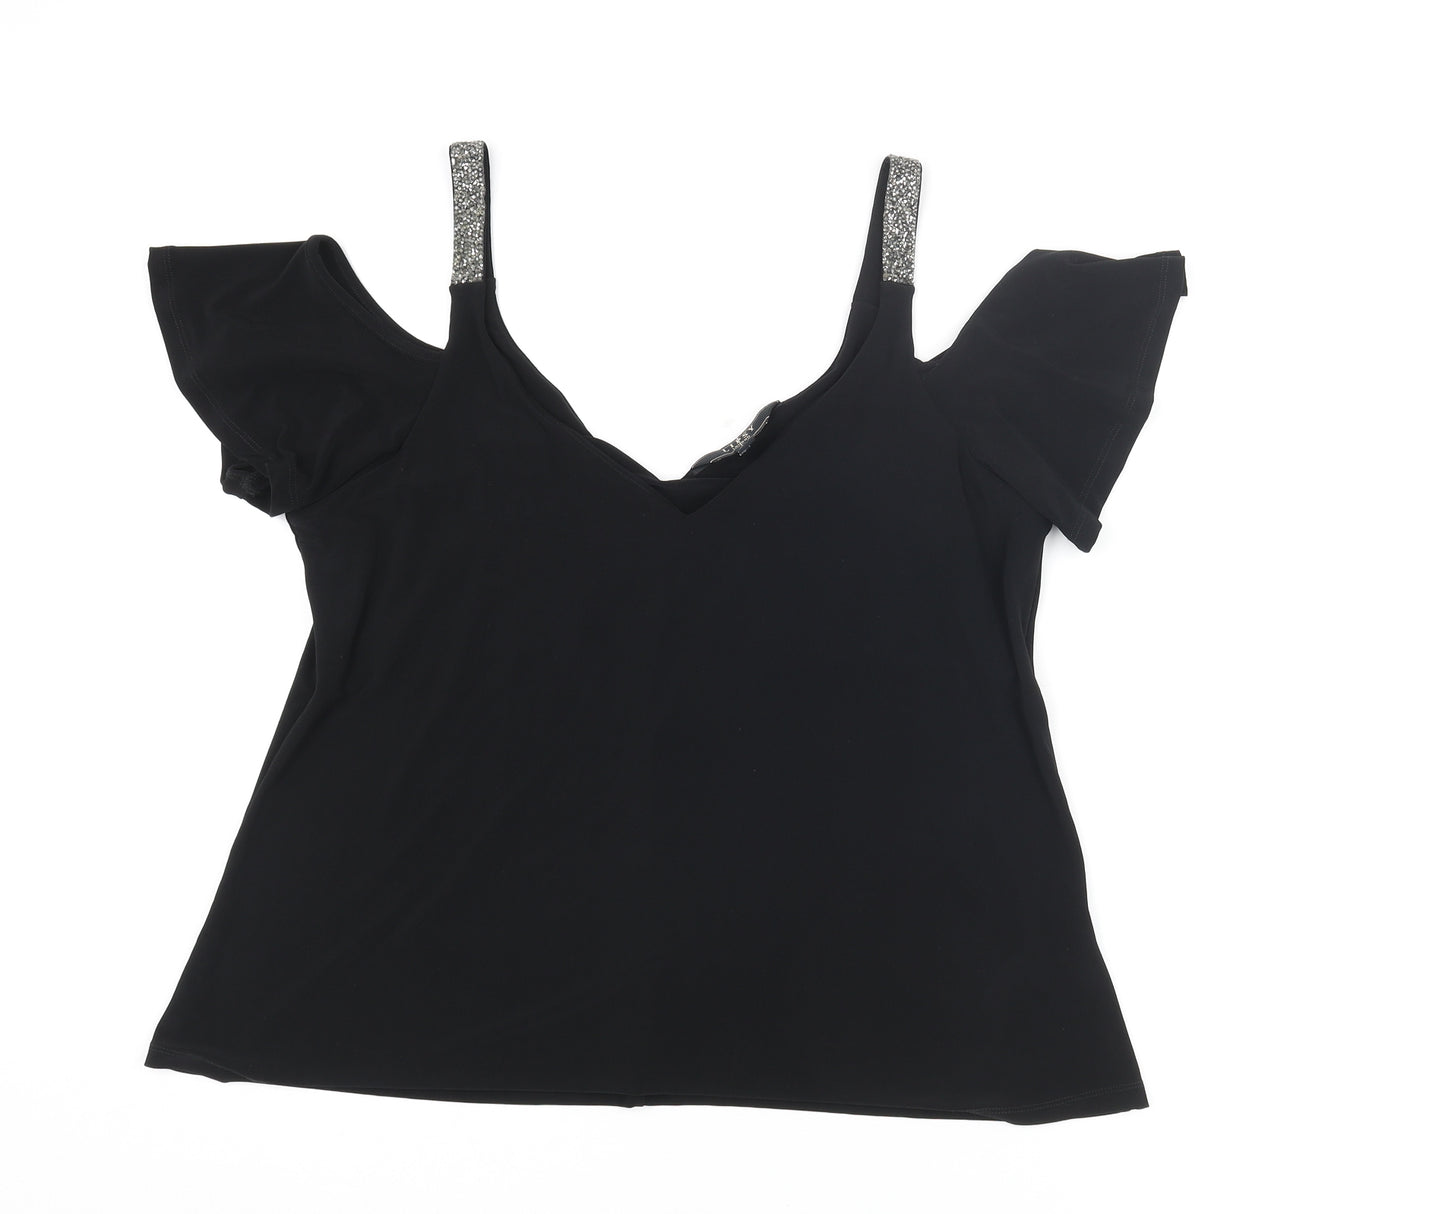 Lipsy Womens Black Polyester Camisole T-Shirt Size 14 V-Neck - Cold Shoulder Glitter Straps